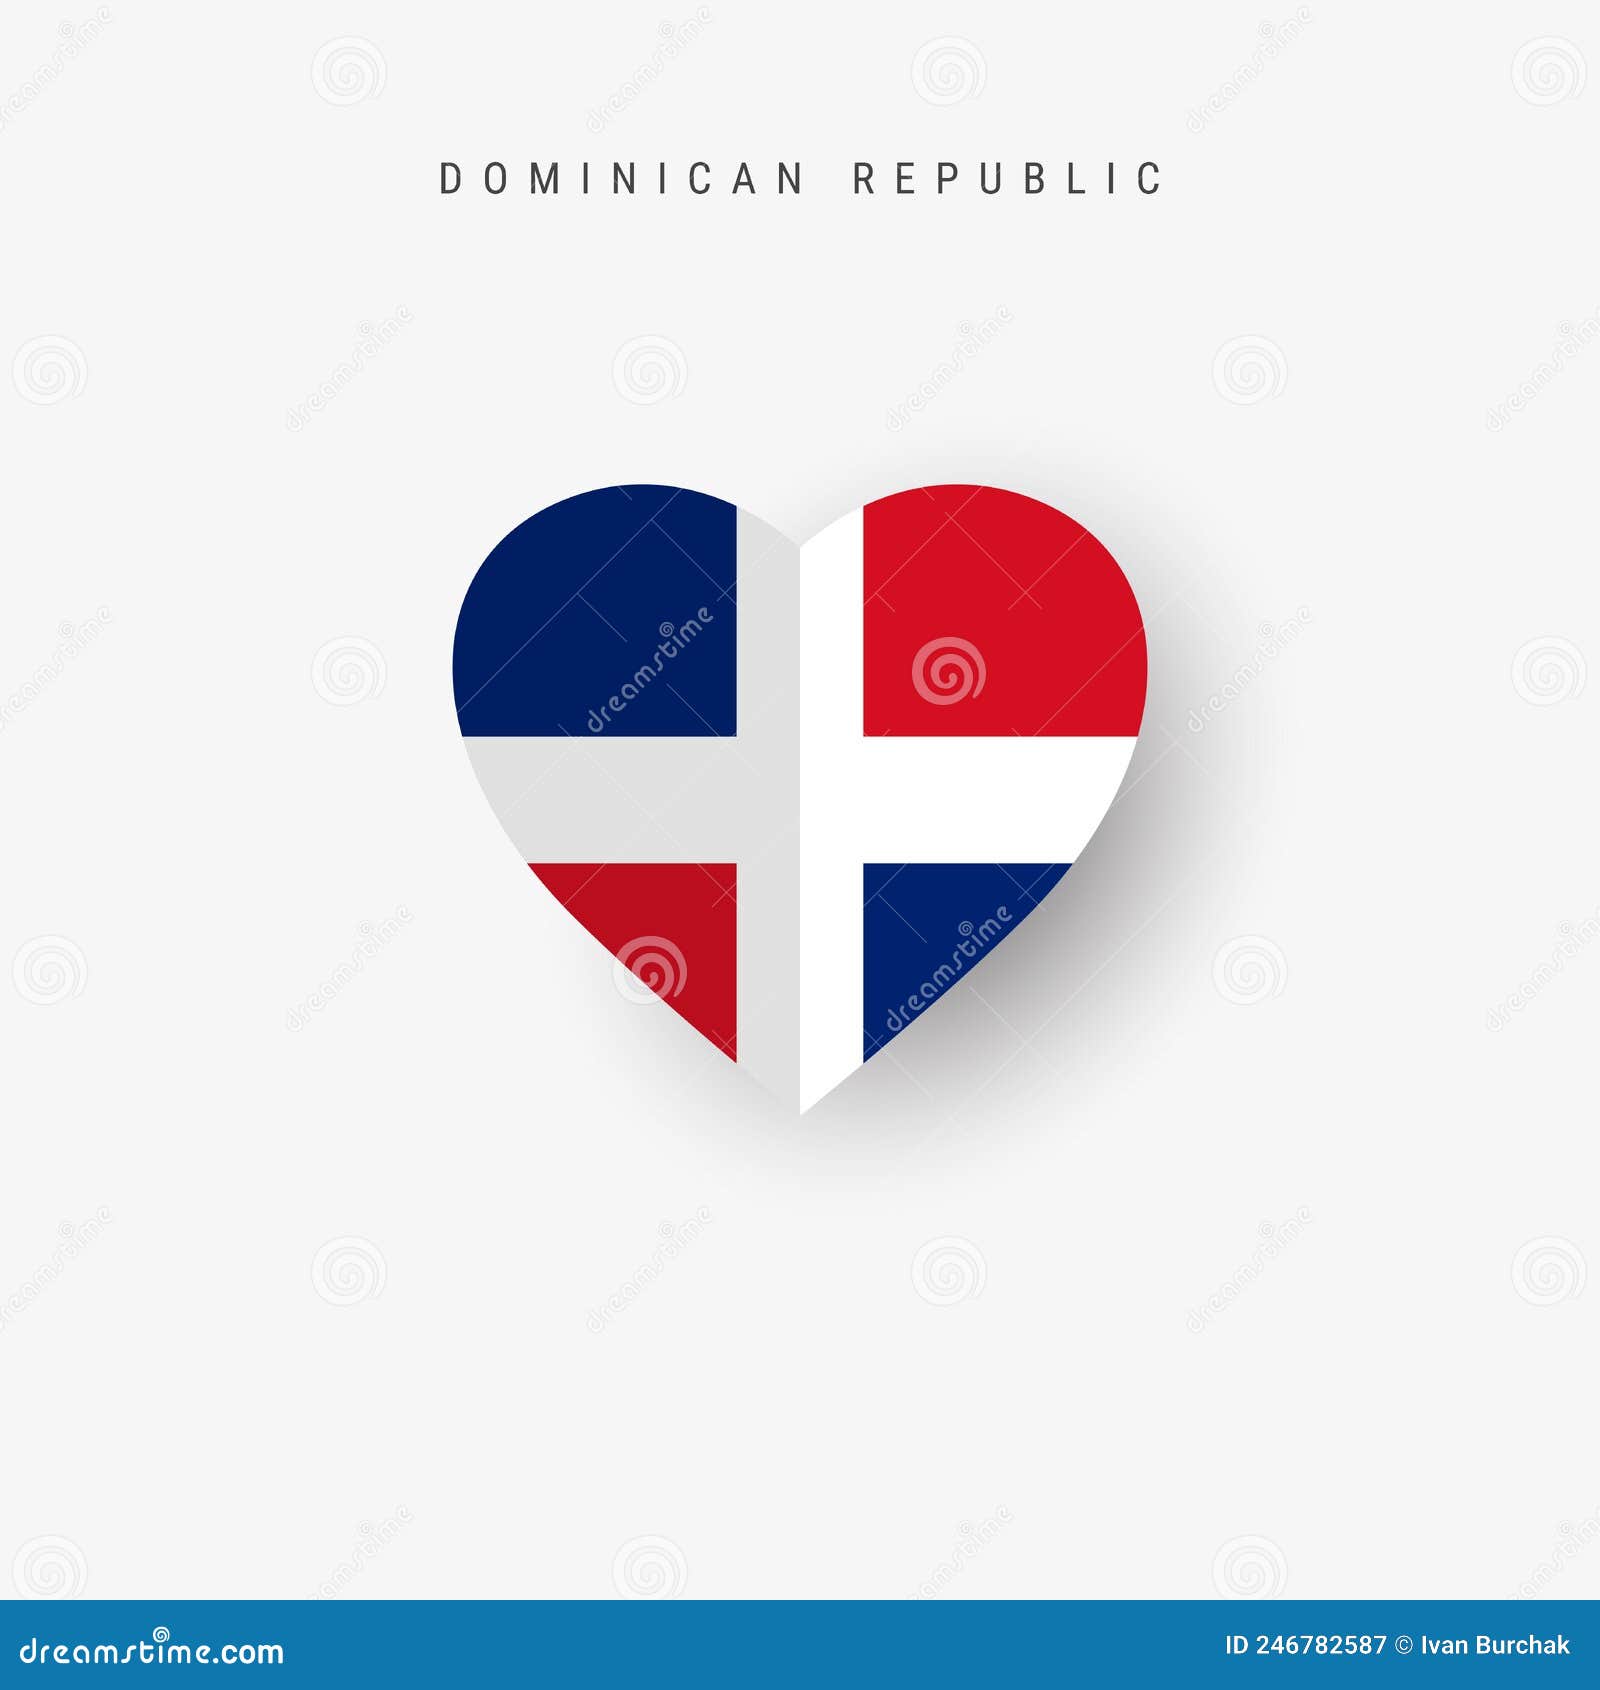 dominican republic heart d flag. origami paper cut republica dominicana national banner